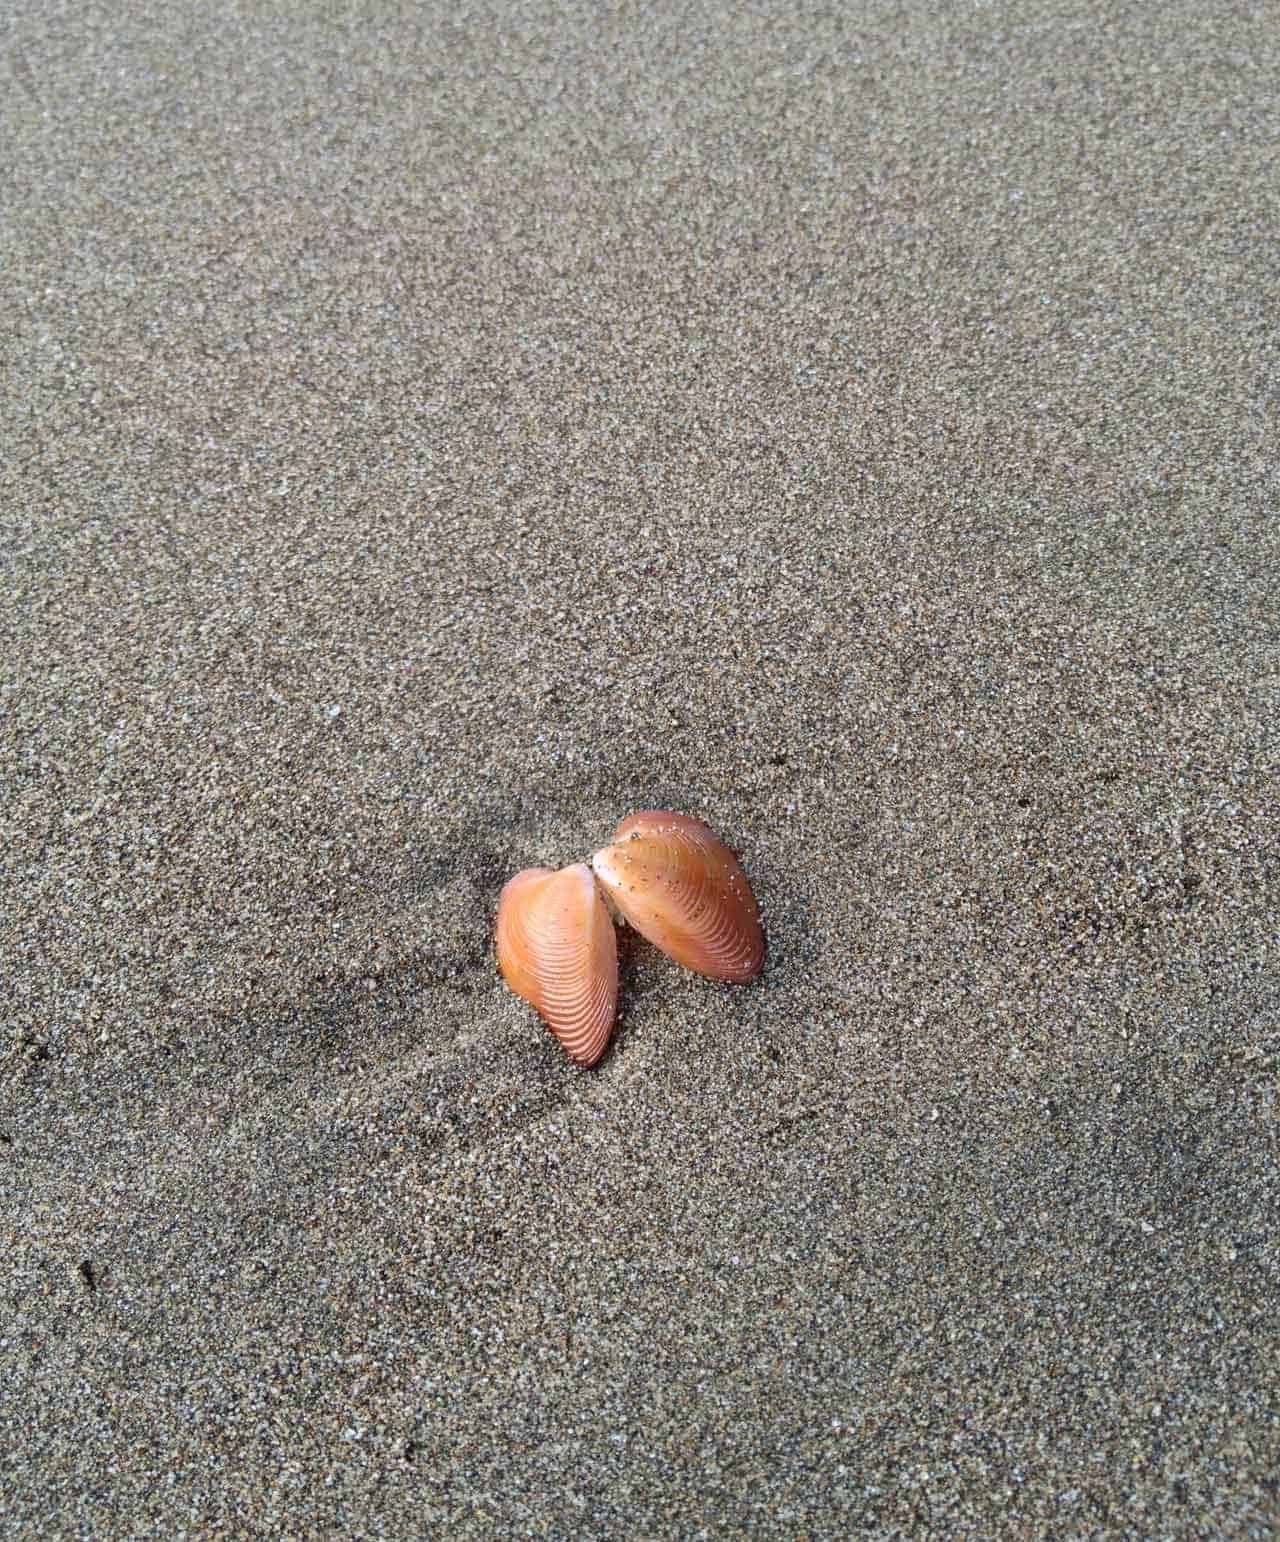 _images/seashell_costa_rica_beach-1.jpg